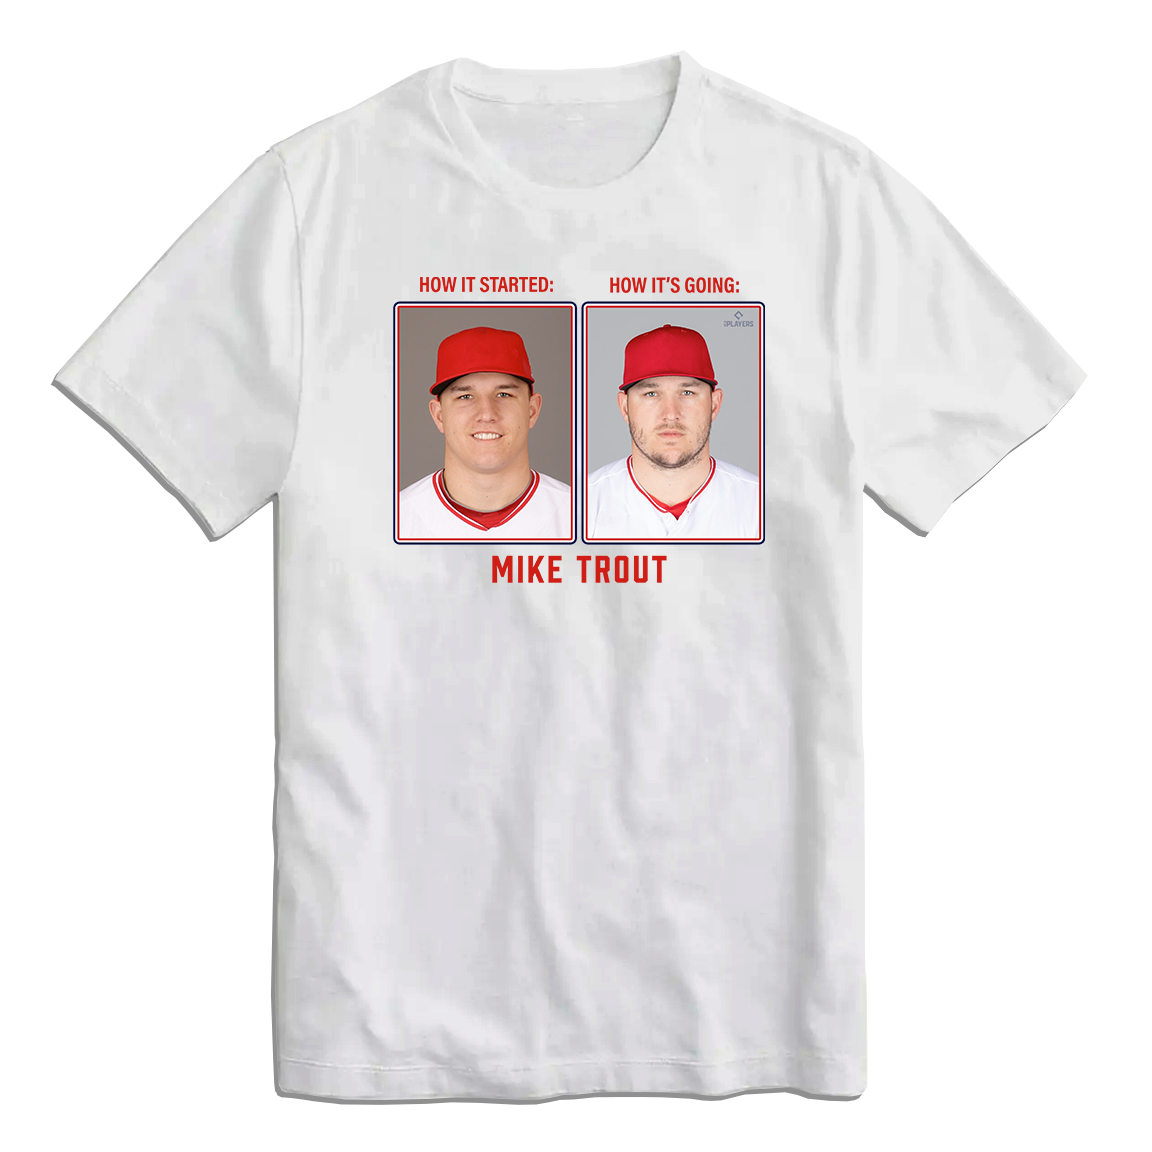 Home Run Champ Aaron Judge New York MLBPA T-Shirt